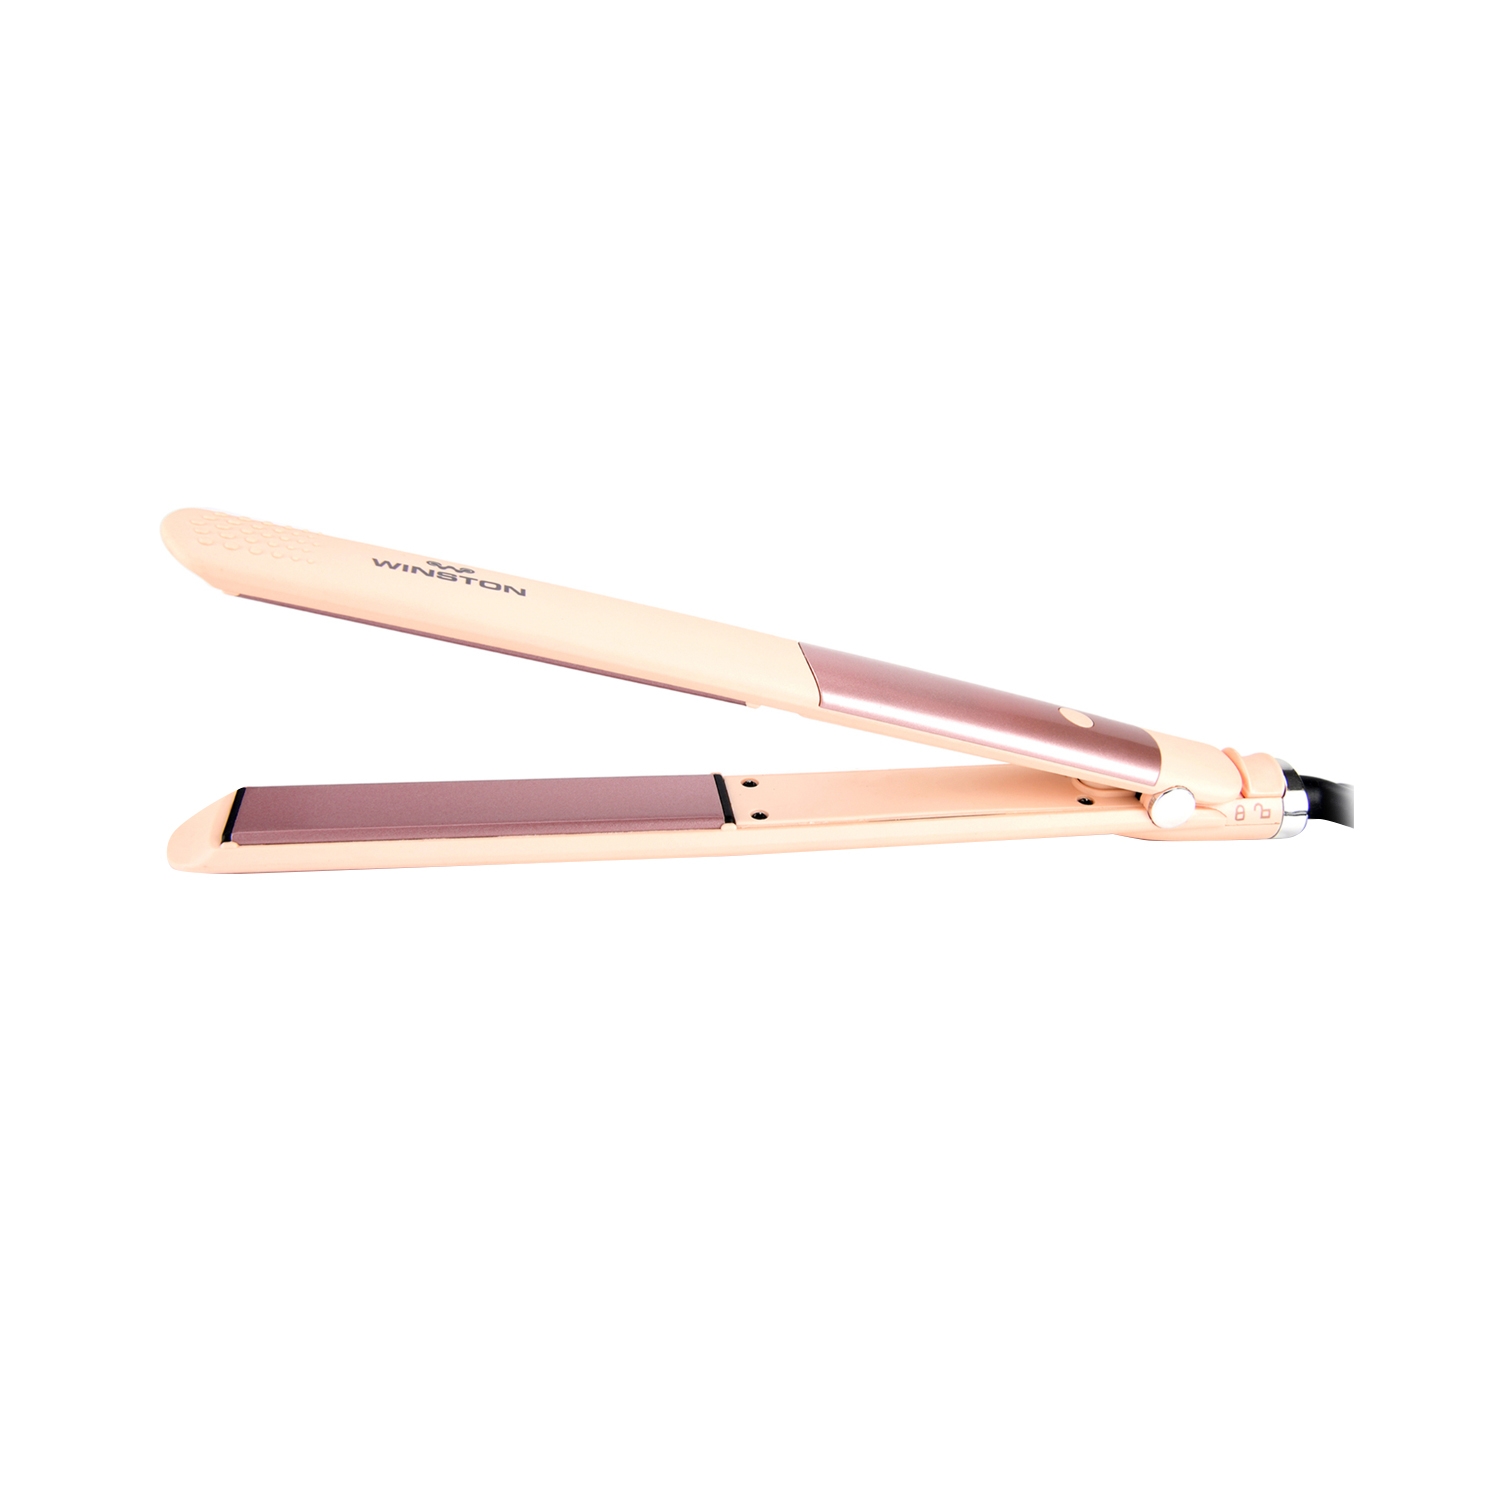 WINSTON | WINSTON Corded Hair Straightener Flat Iron Adjustable Temperature Setting 50W - Pink (1Pc)